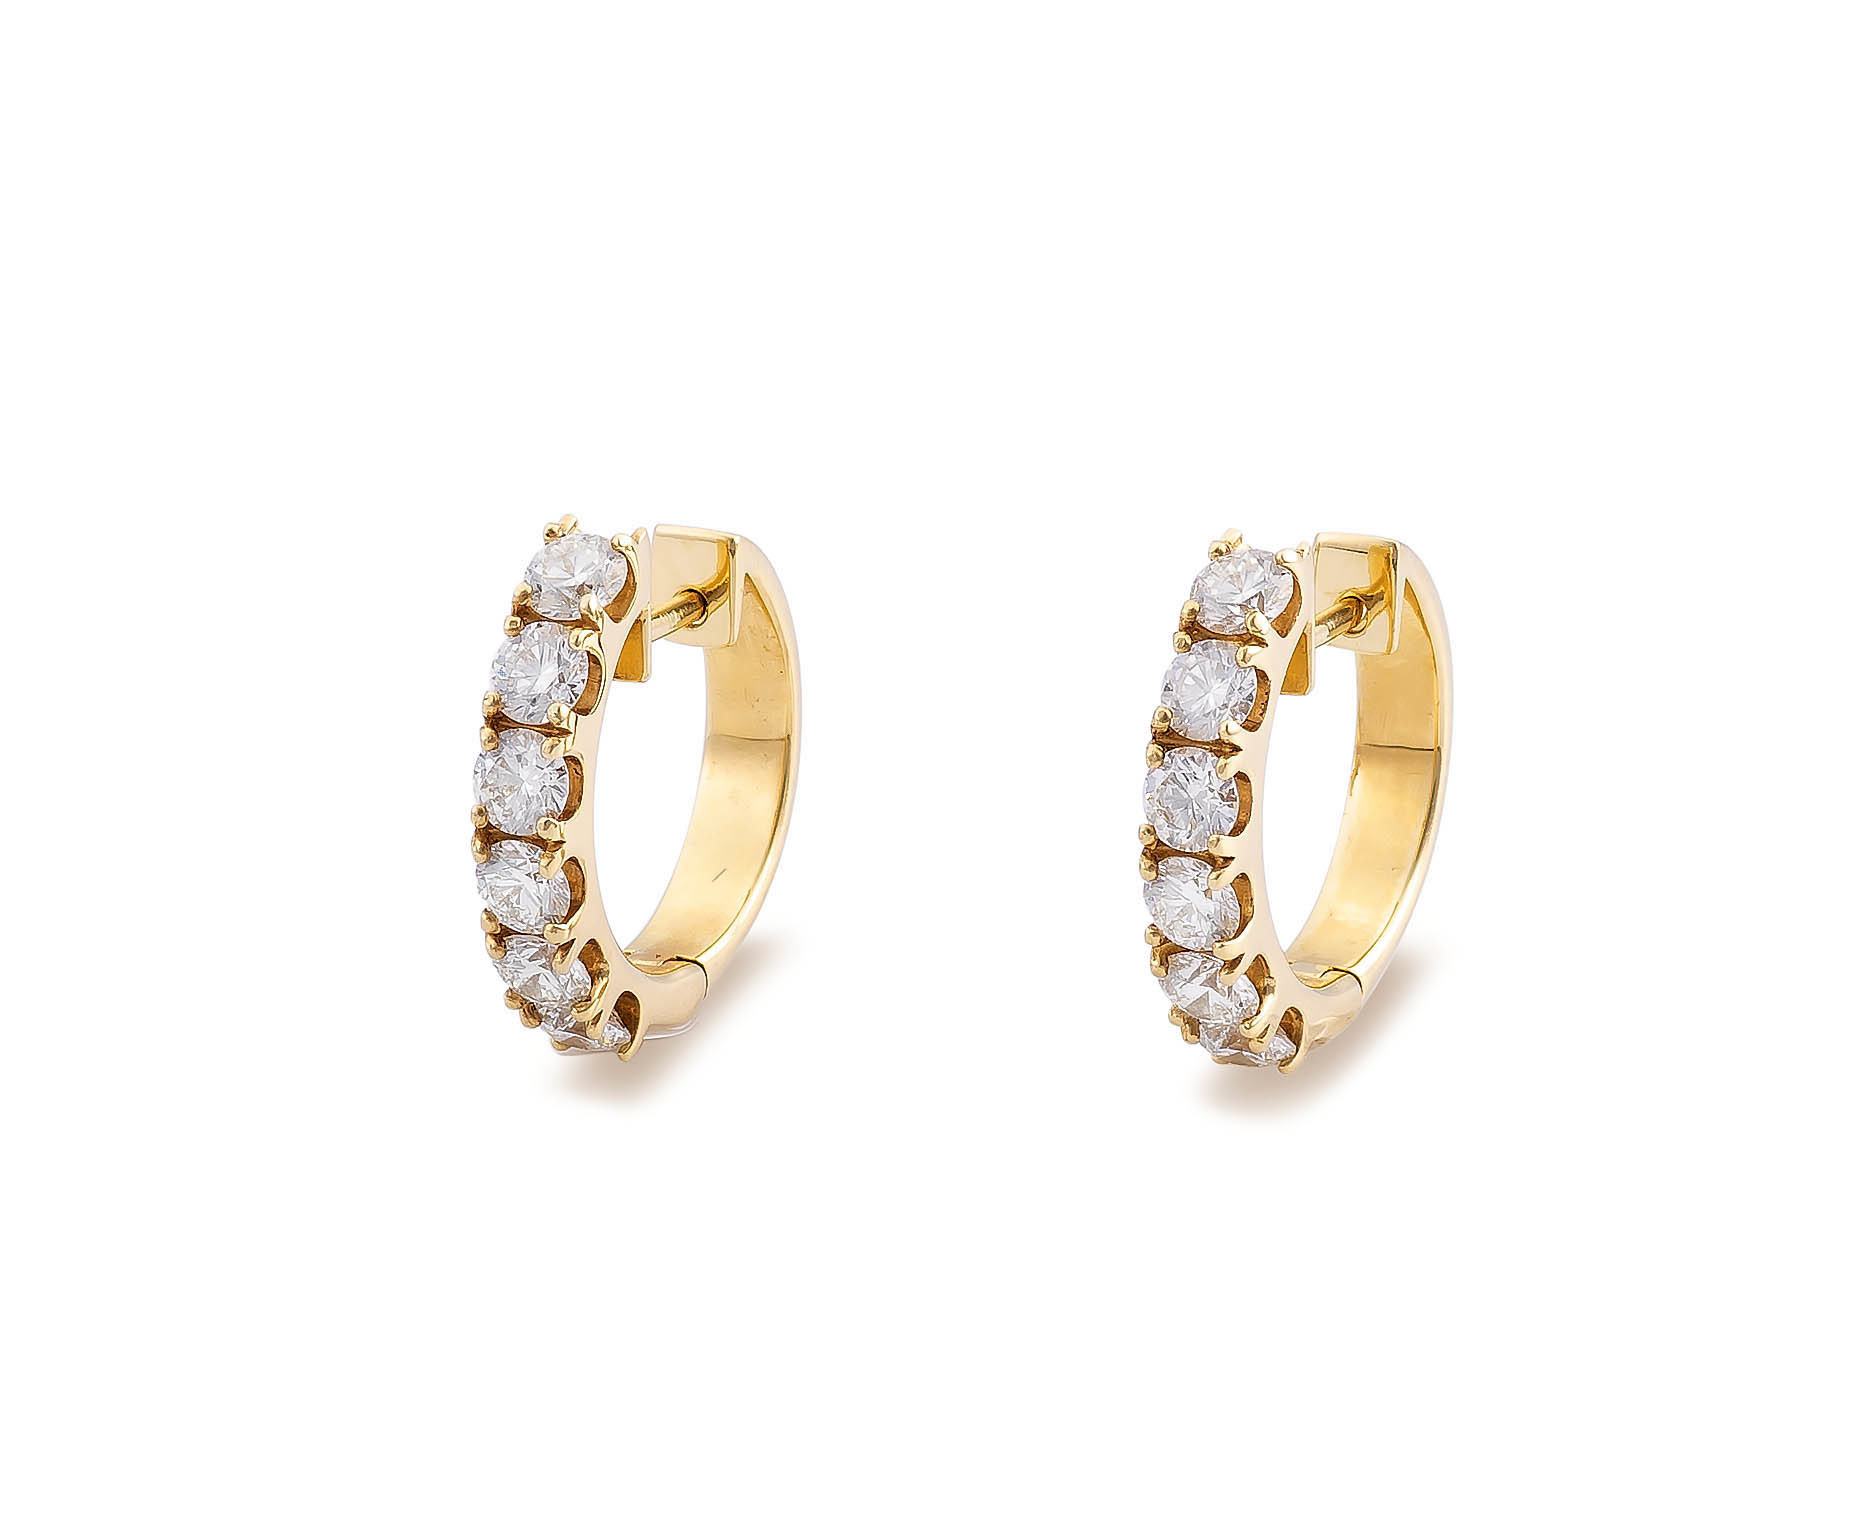 Pair of diamond and 18ct yellow gold half-hoop earrings